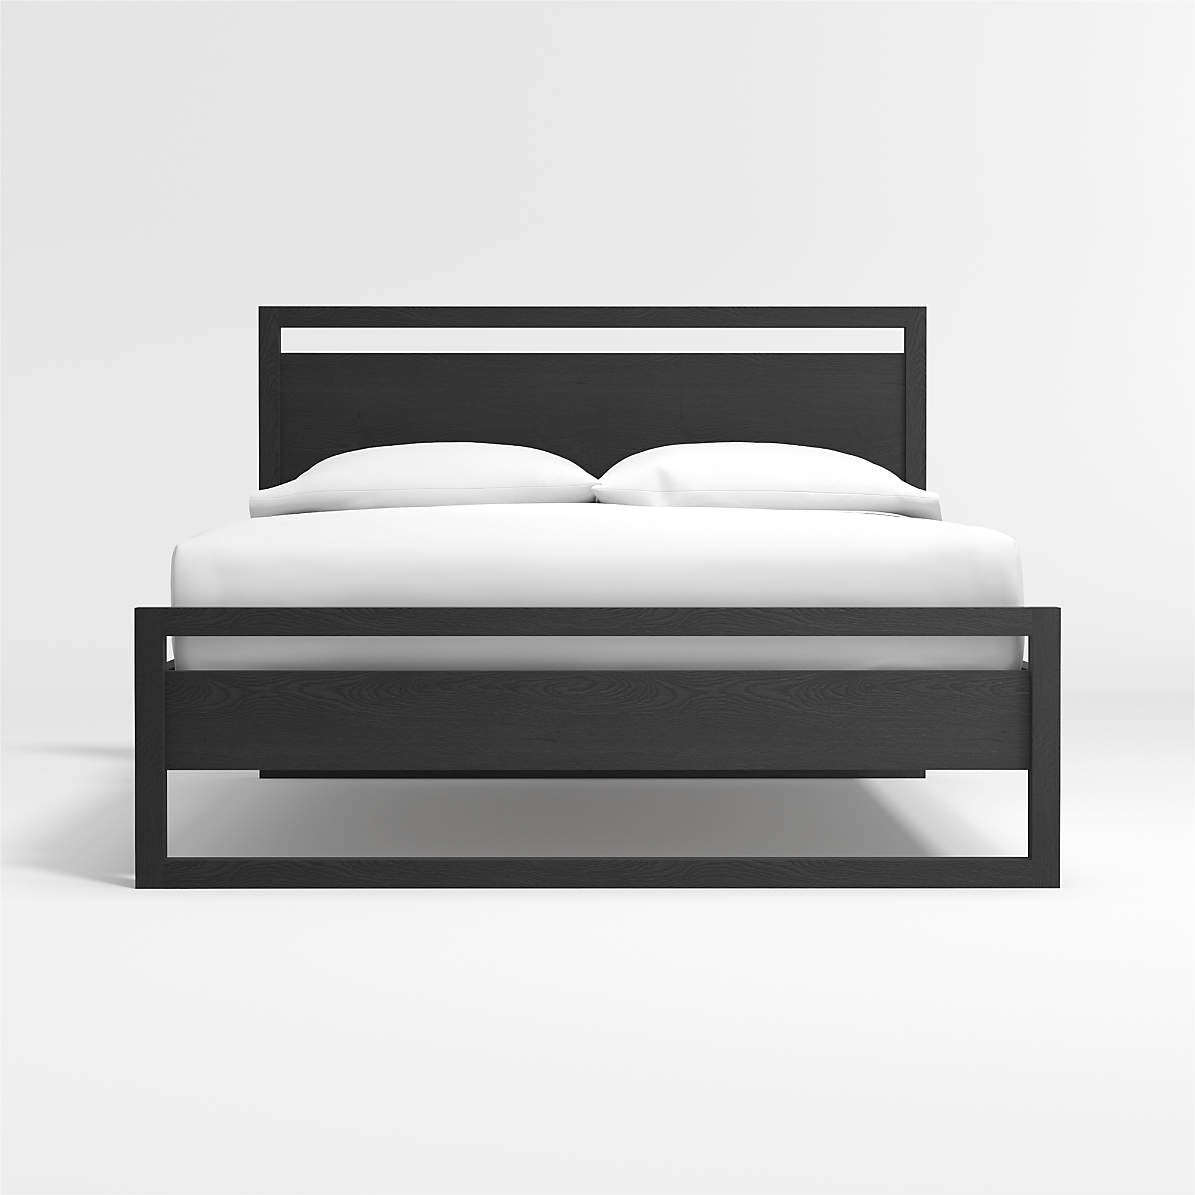 Linea Black Bed Crate And Barrel, Dark Bed Frame